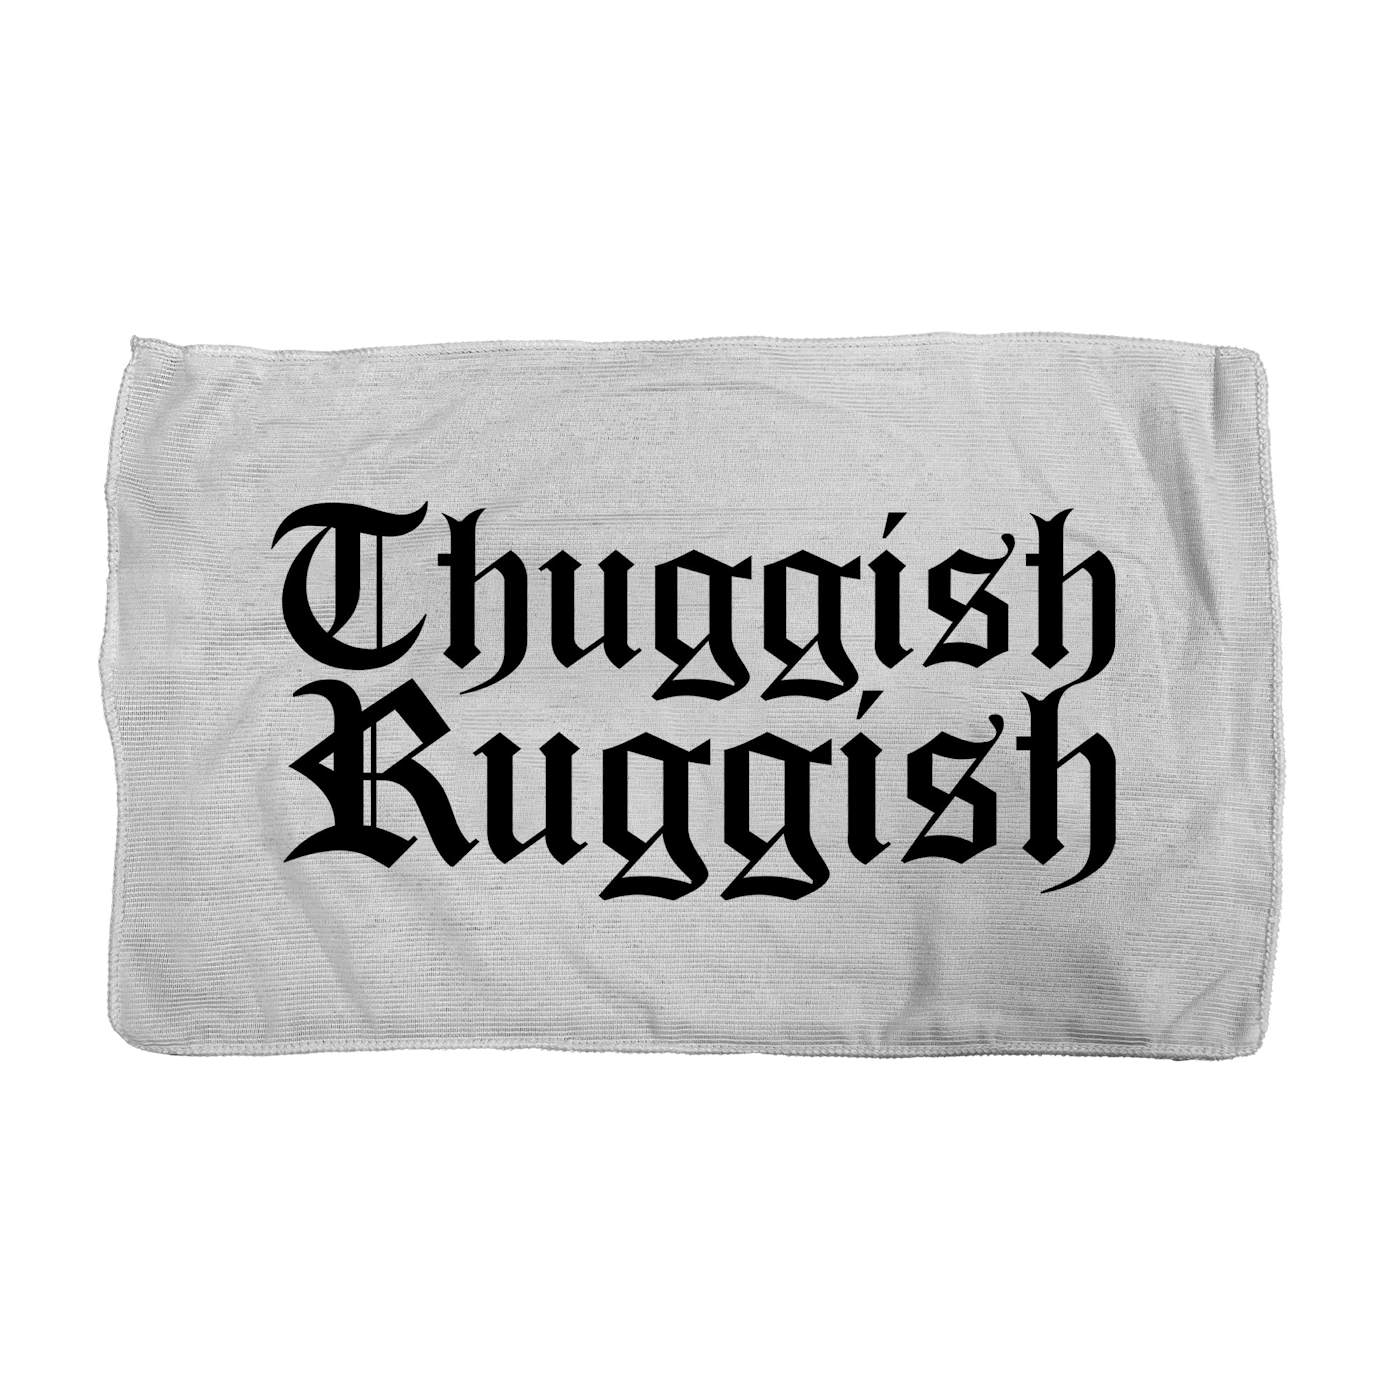 Bone Thugs-N-Harmony Thuggish Ruggish Towel